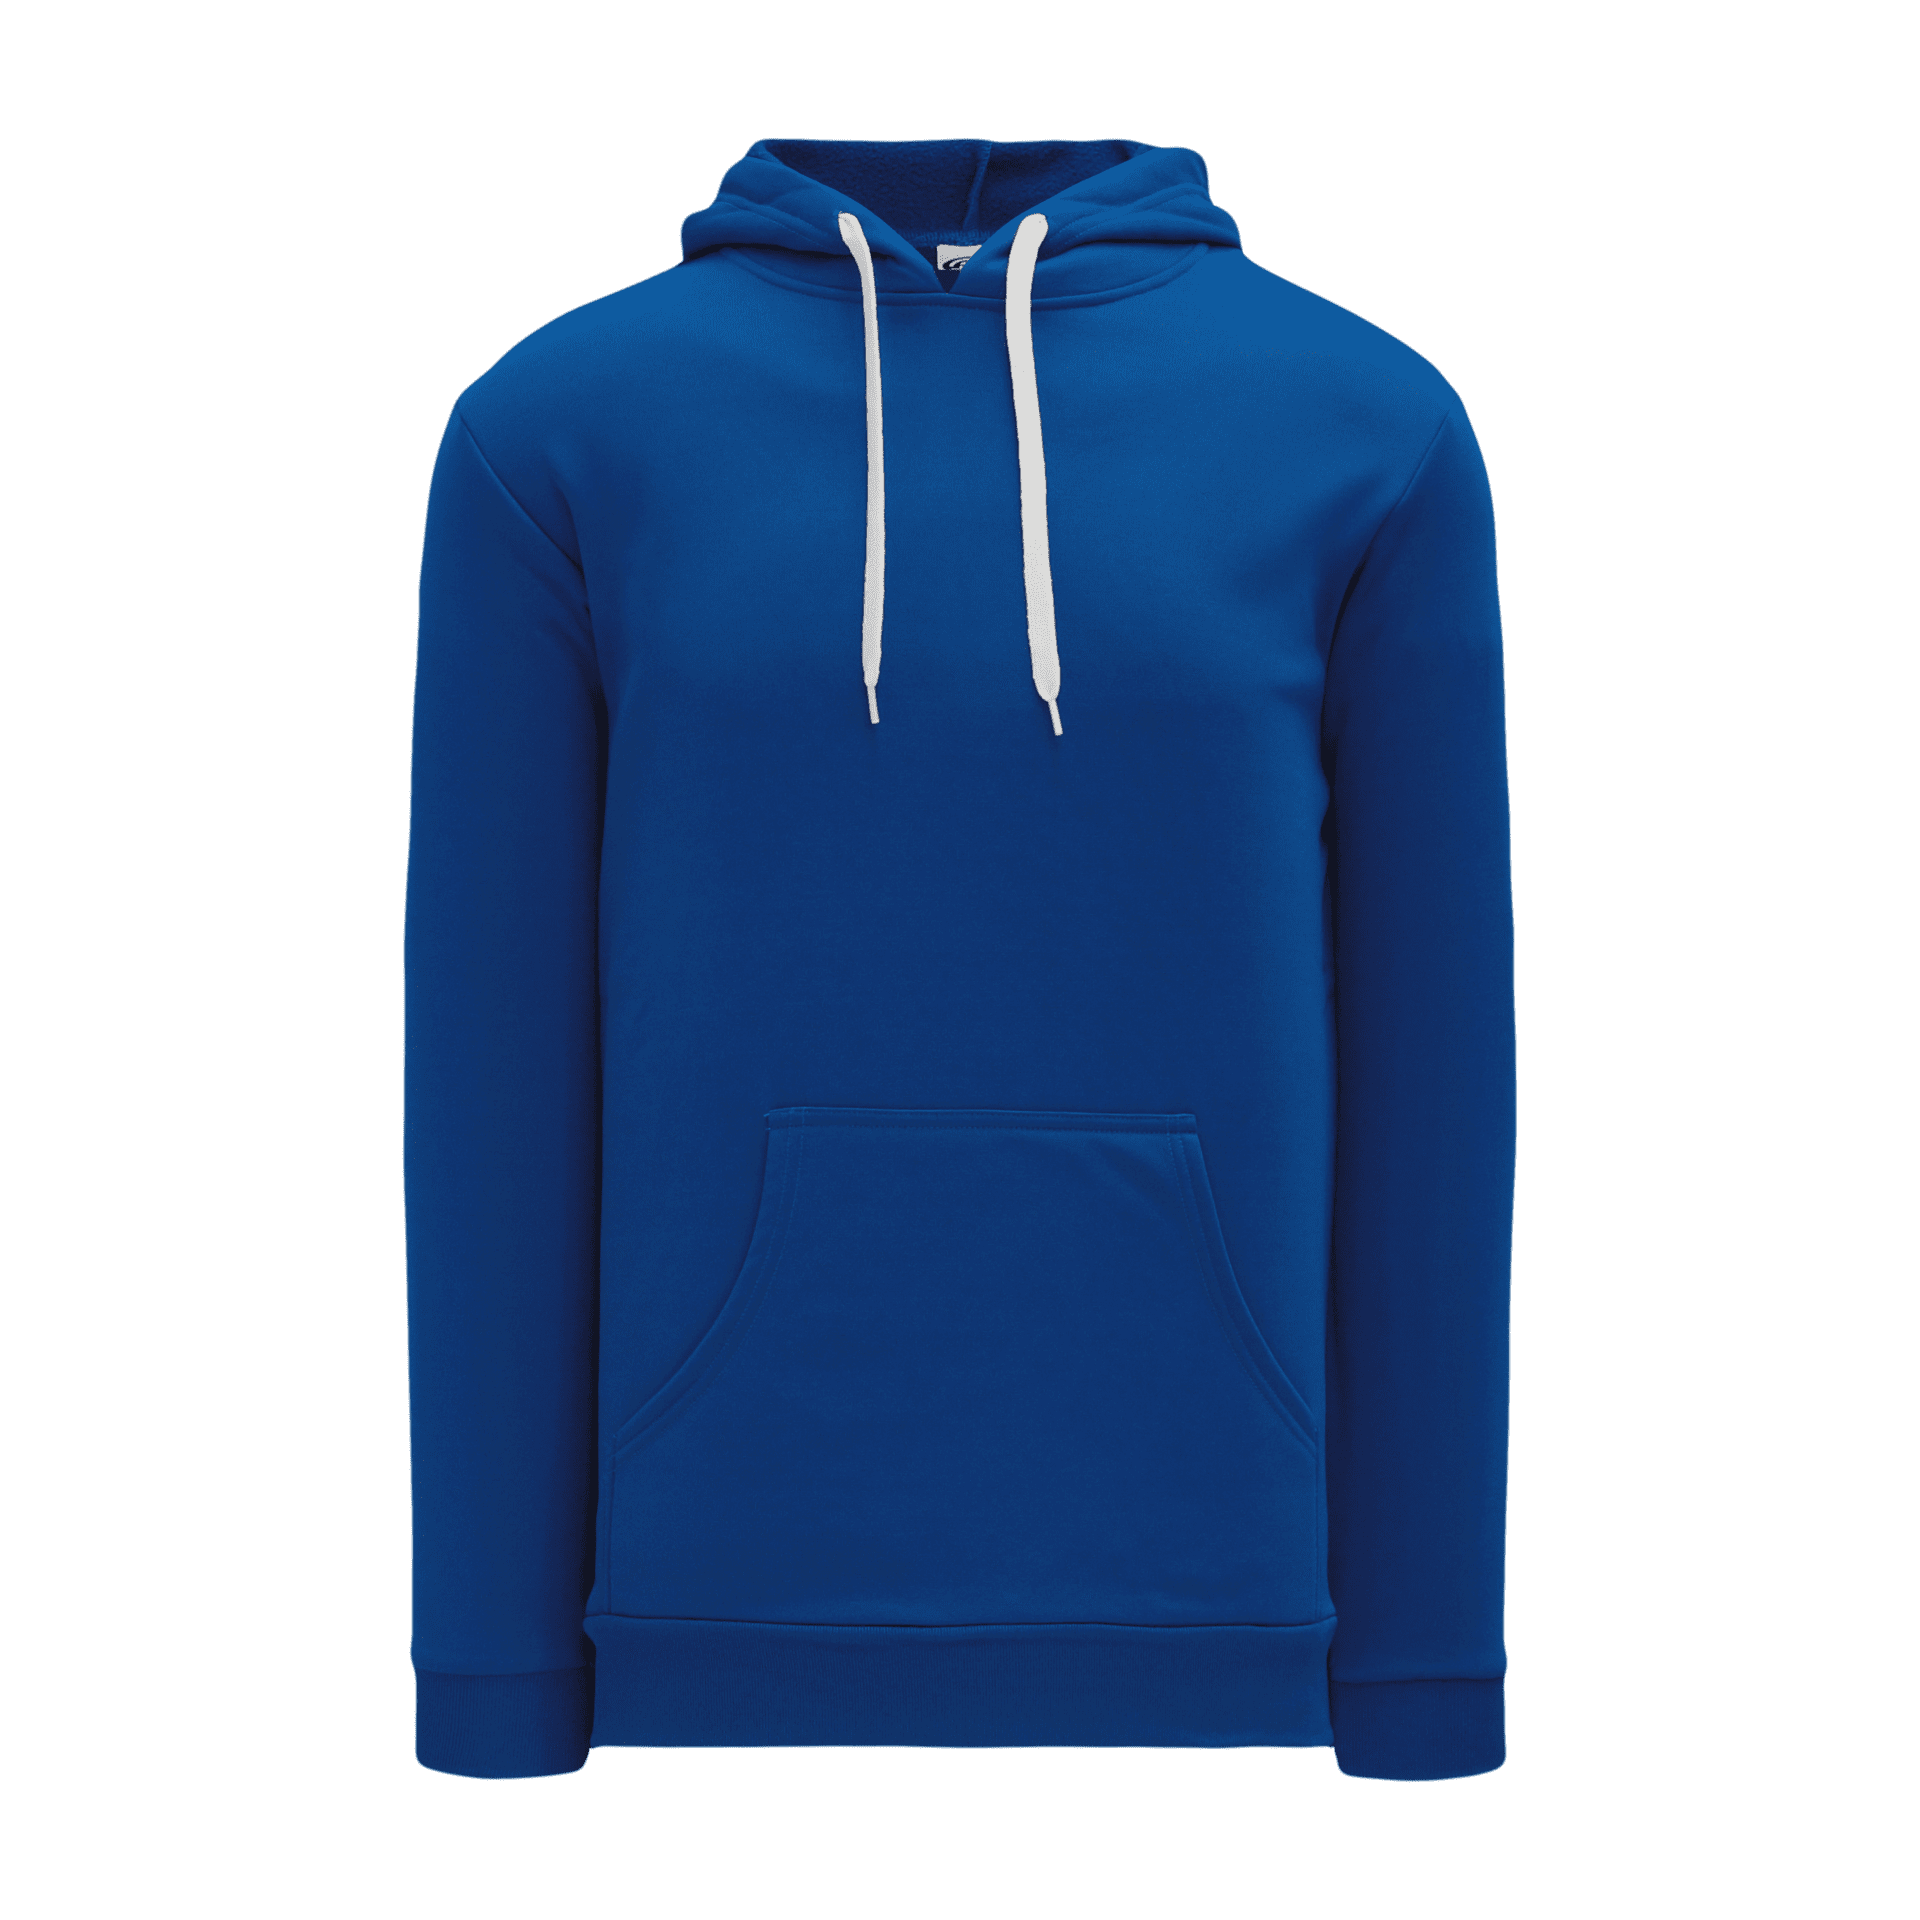 ATHLETIC KNIT Polyfleece Hooded Sweatshirt #A1835 Royal Blue